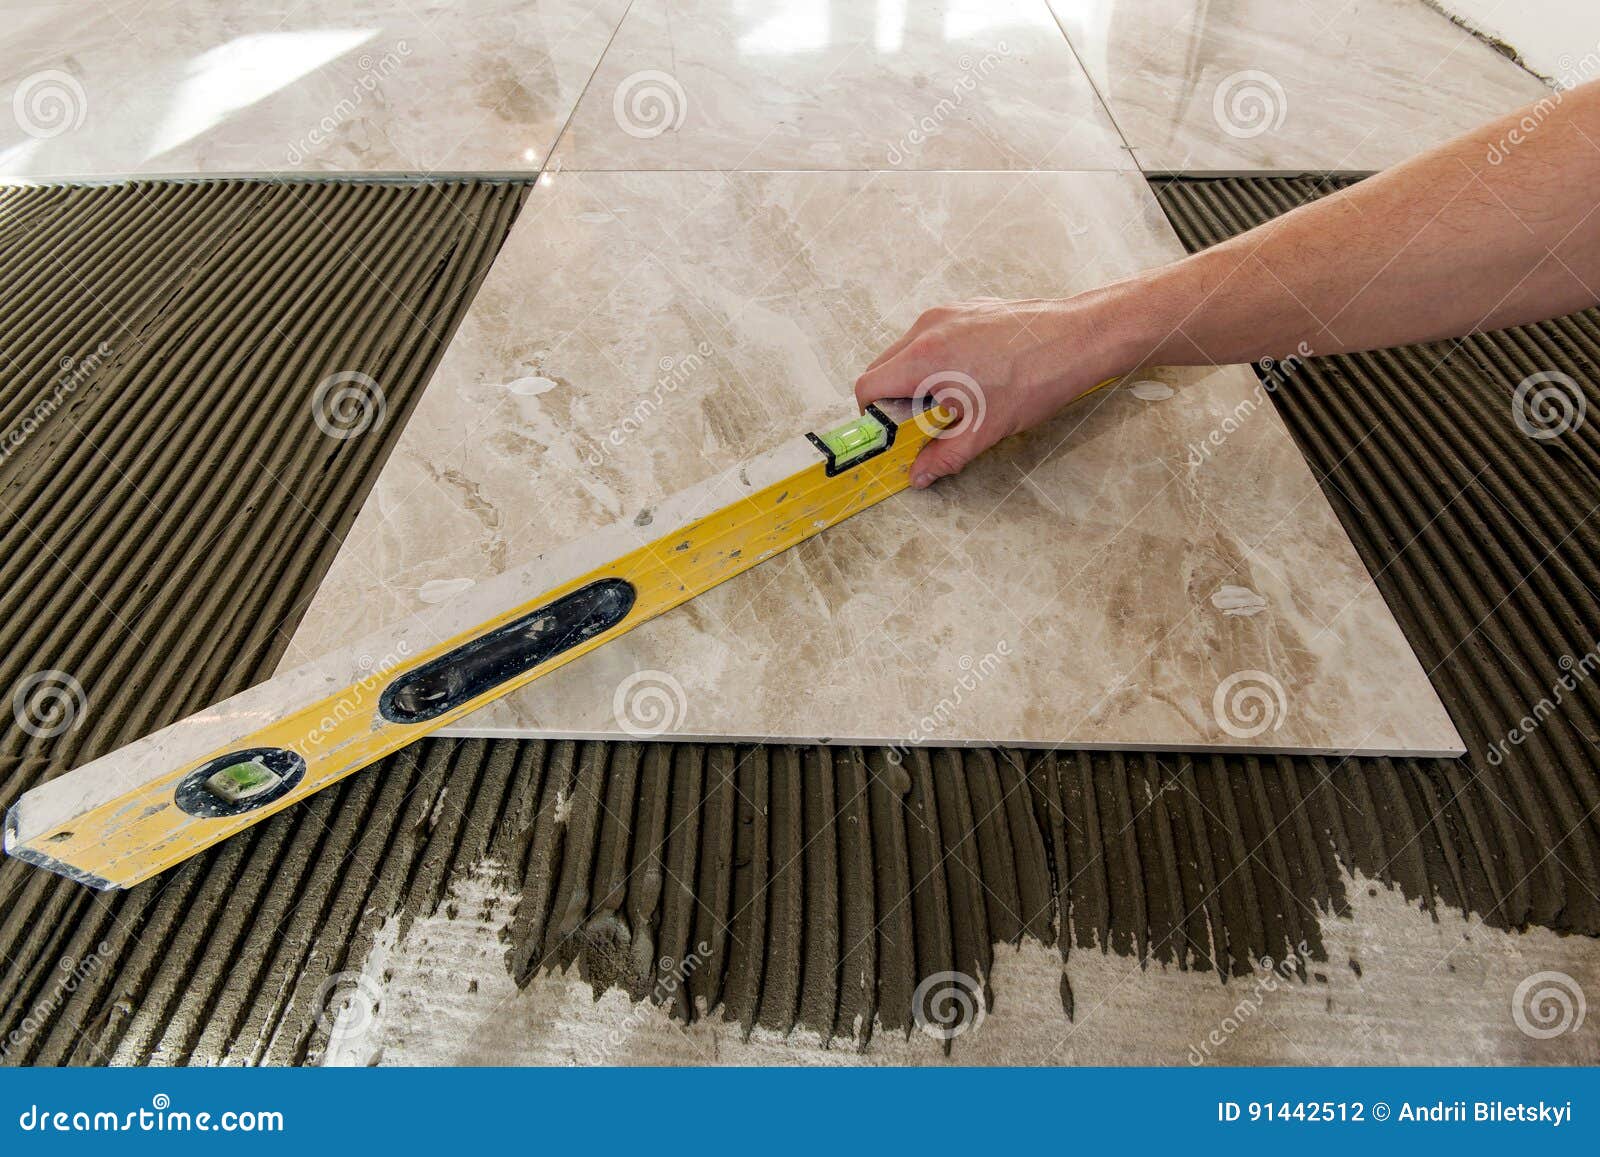 ceramic tiles and tools for tiler. floor tiles installation. home improvement, renovation - ceramic tile floor